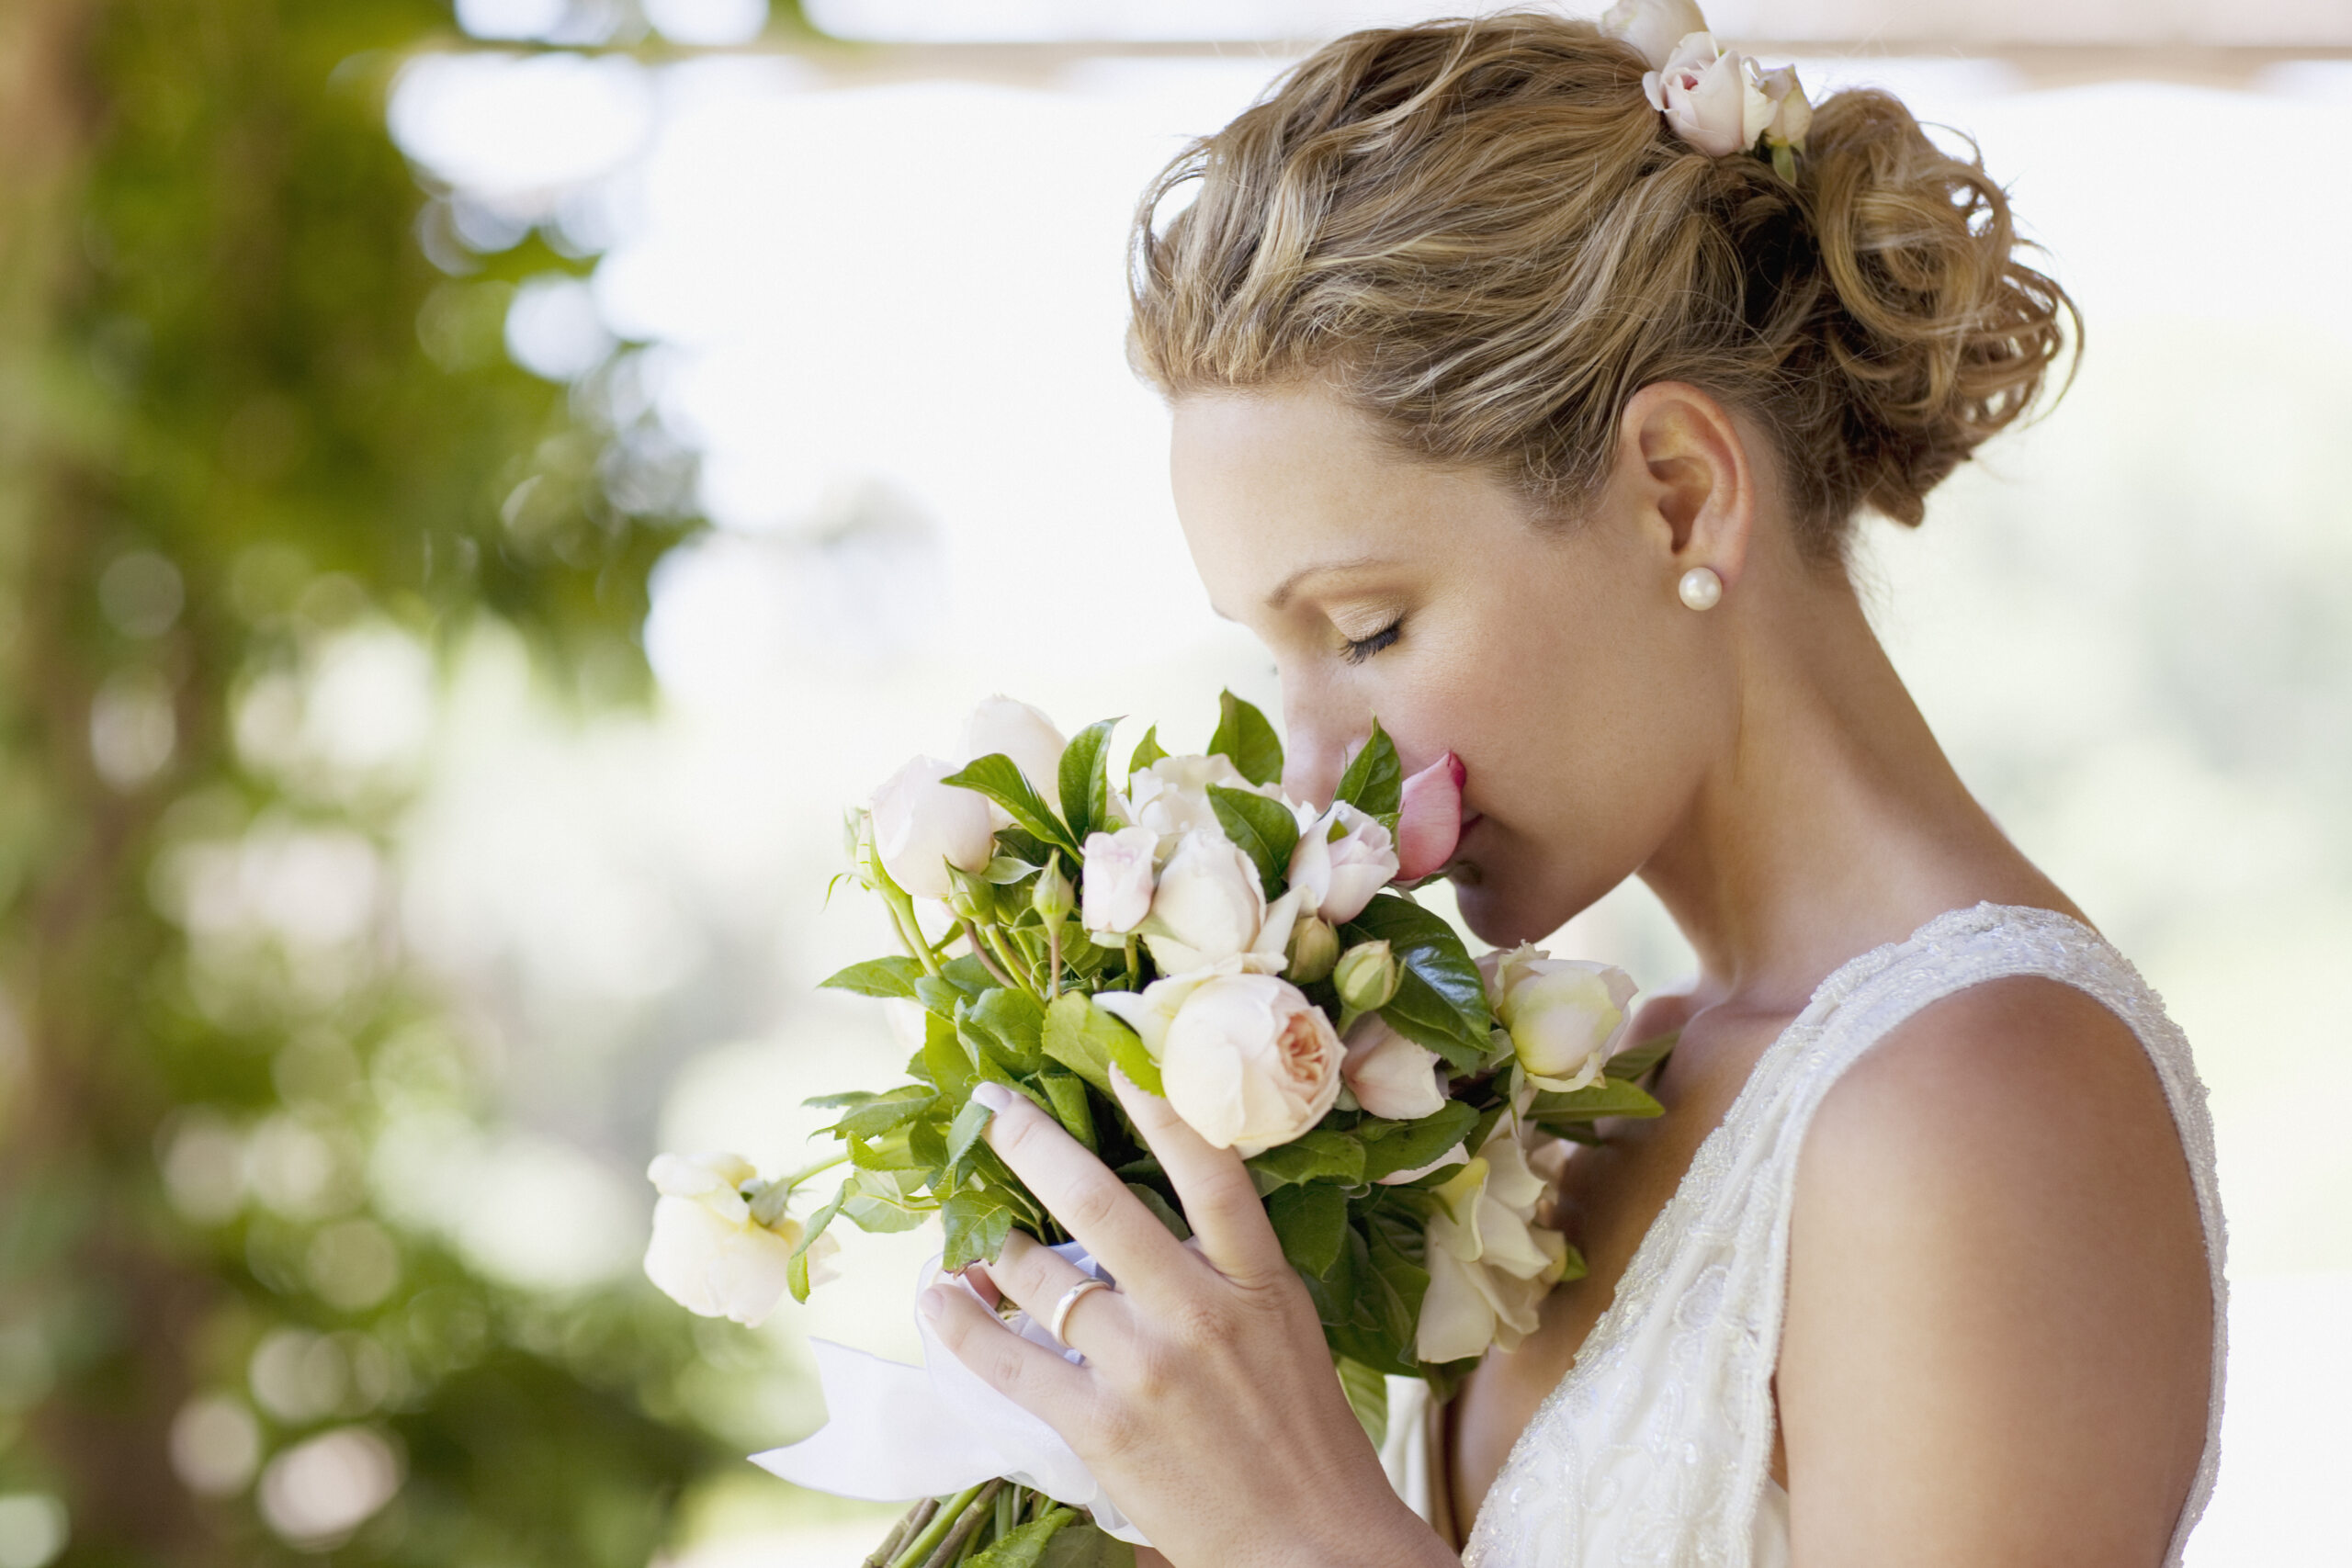 a bride holding wedding flowers